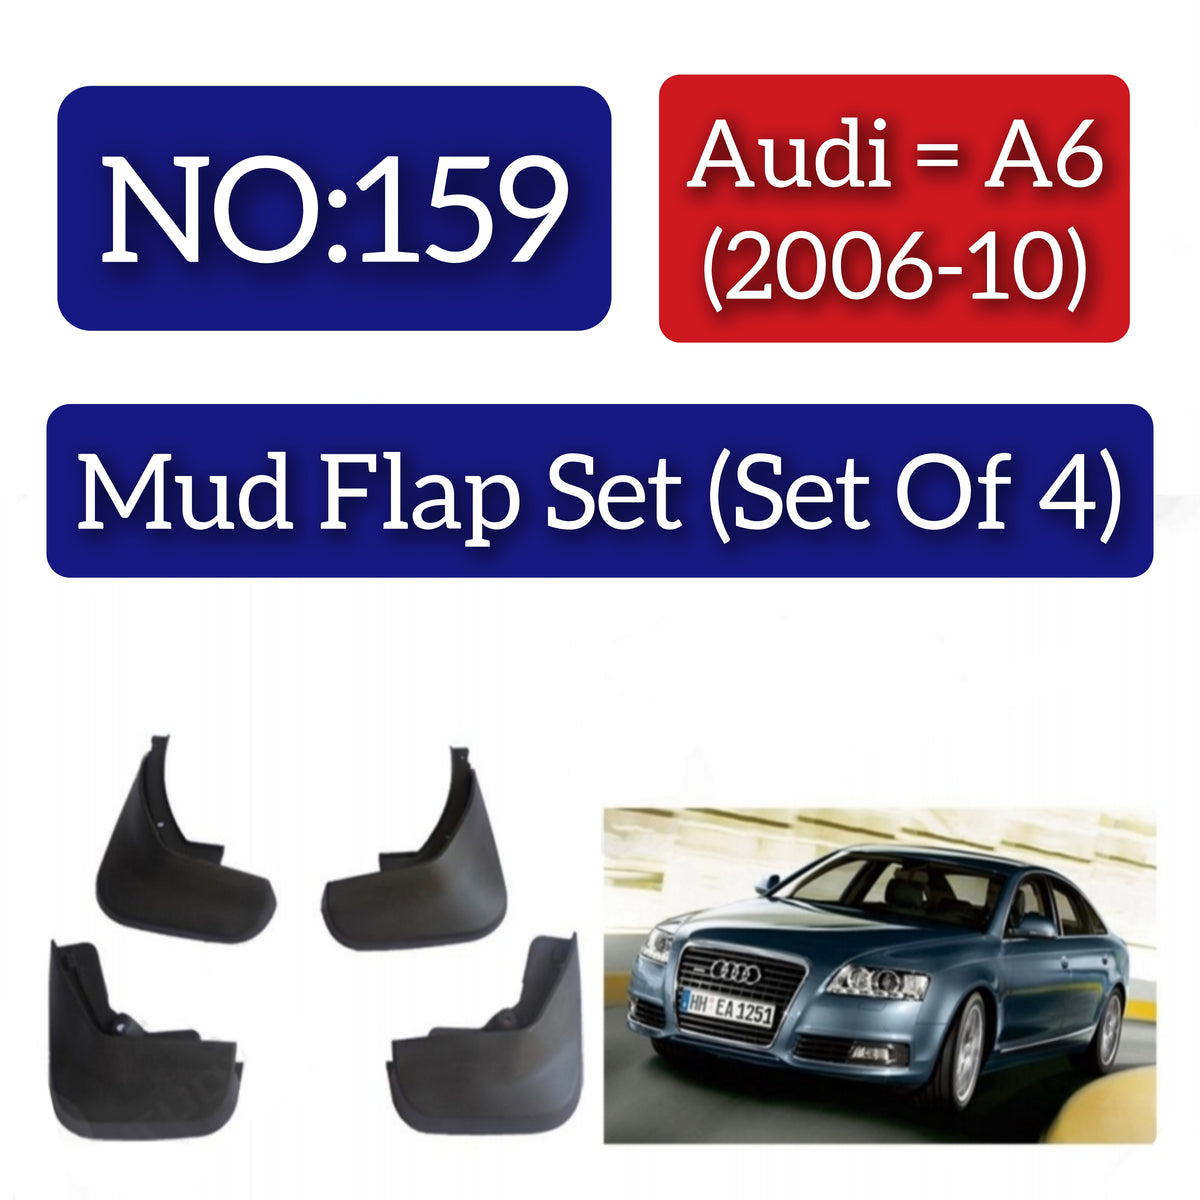 Audi A6 (2006-10) Mud Flap Set (Set of 4)Tag 159